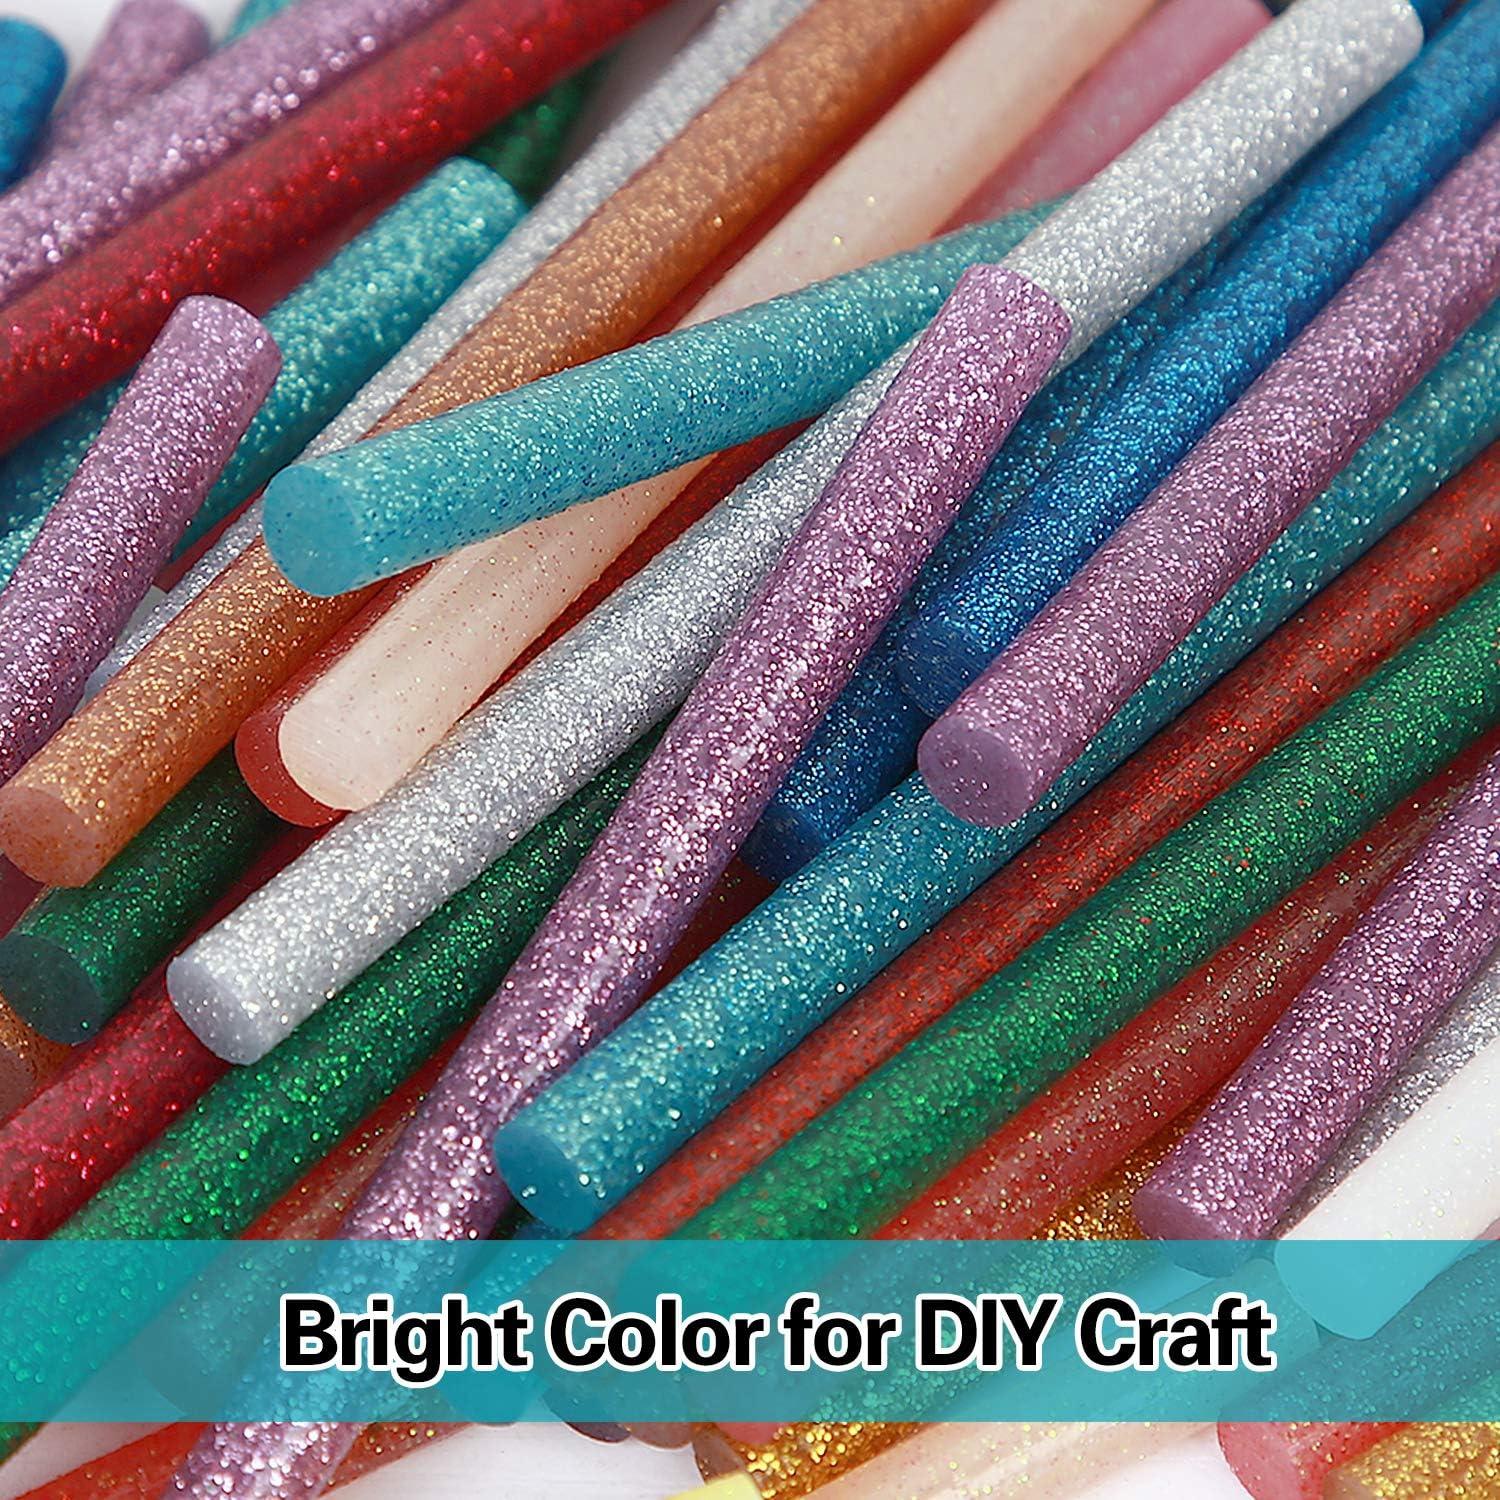  Colored Hot Glue Sticks, Enpoint 3.93 x 0.27 in Mini Glue Stick  Glitter, EVA Adhesive Colorful Hot Melt Glue Sticks for DIY Art Craft  Sealing General Repairs Gluing Projects, 144 PCS